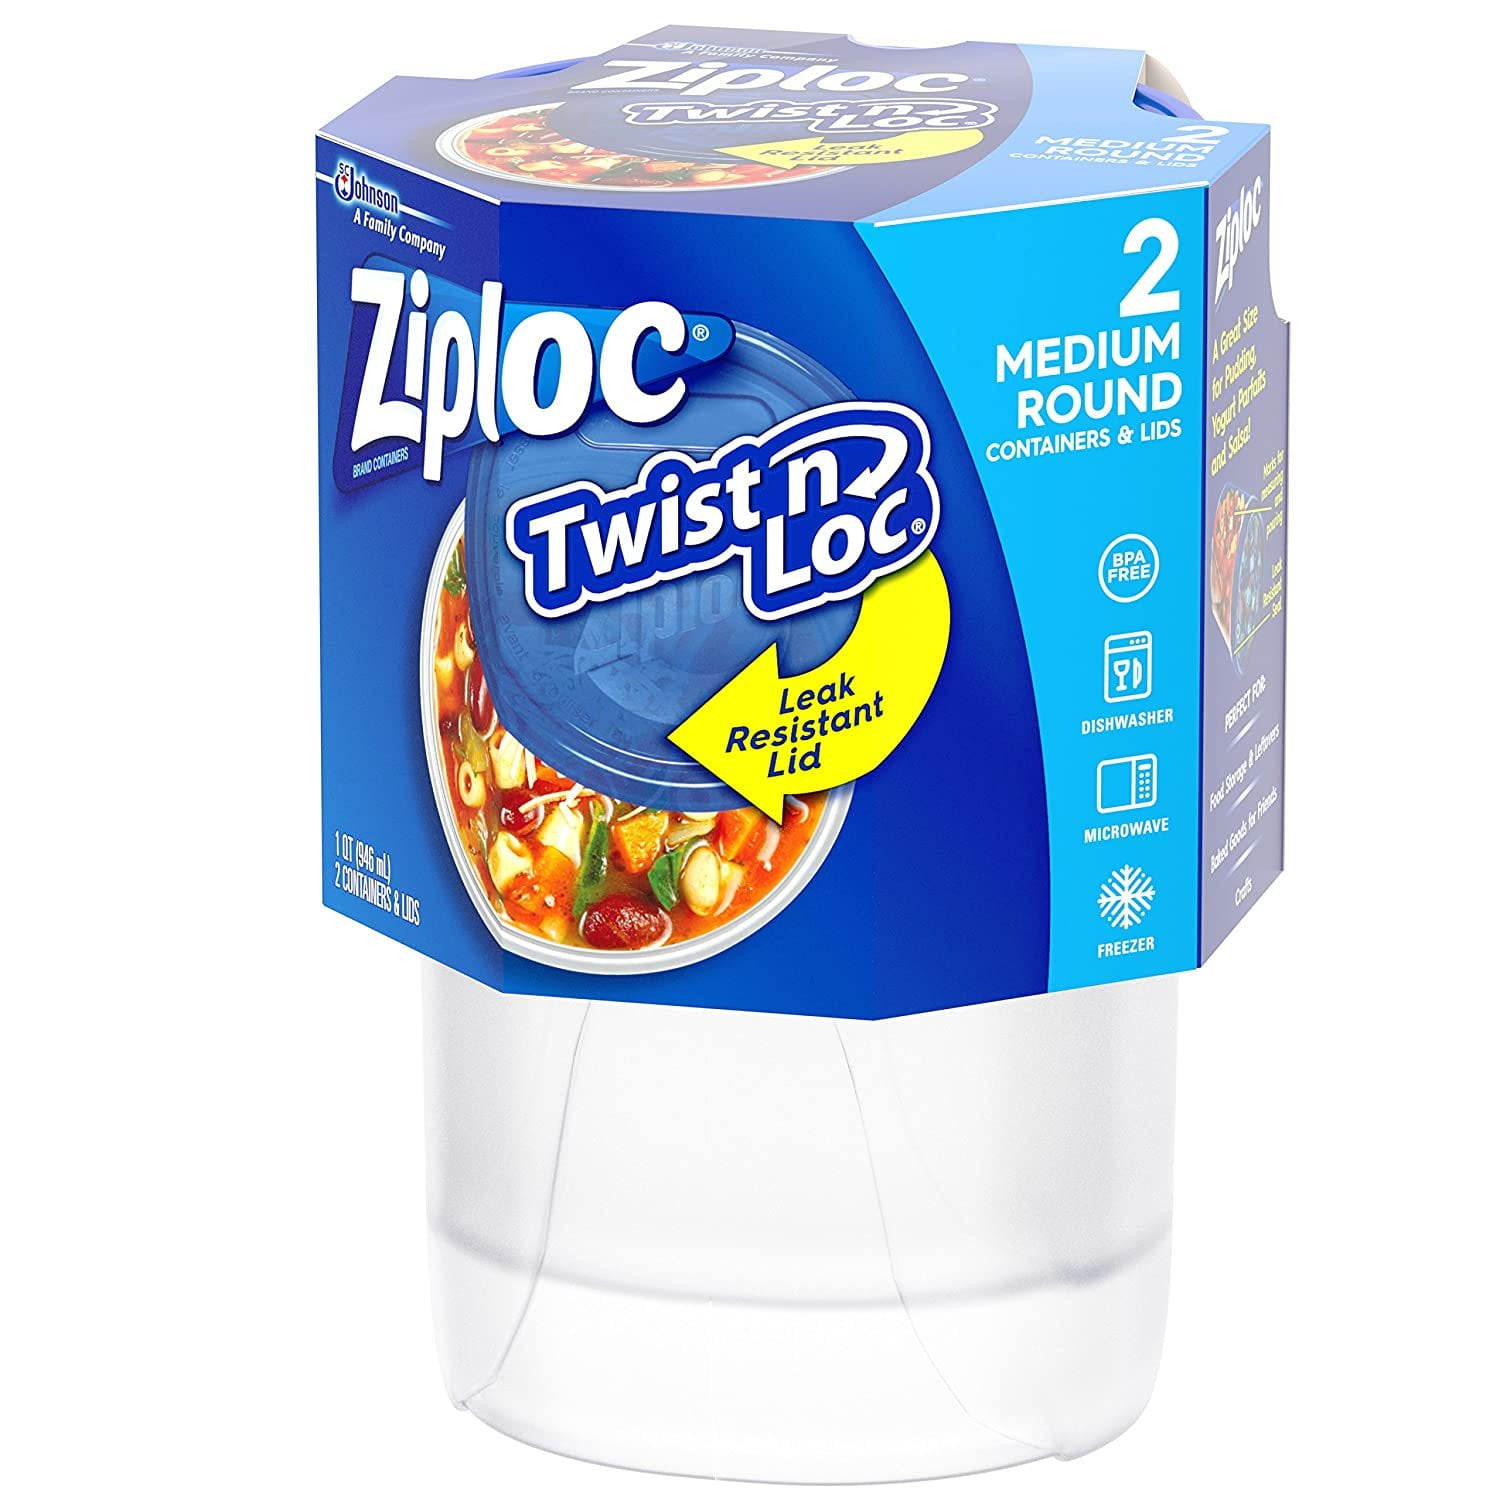 Ziploc 16 oz Twist 'N Loc 3 Containers Small Round BPA Free Dishwasher  Freezer